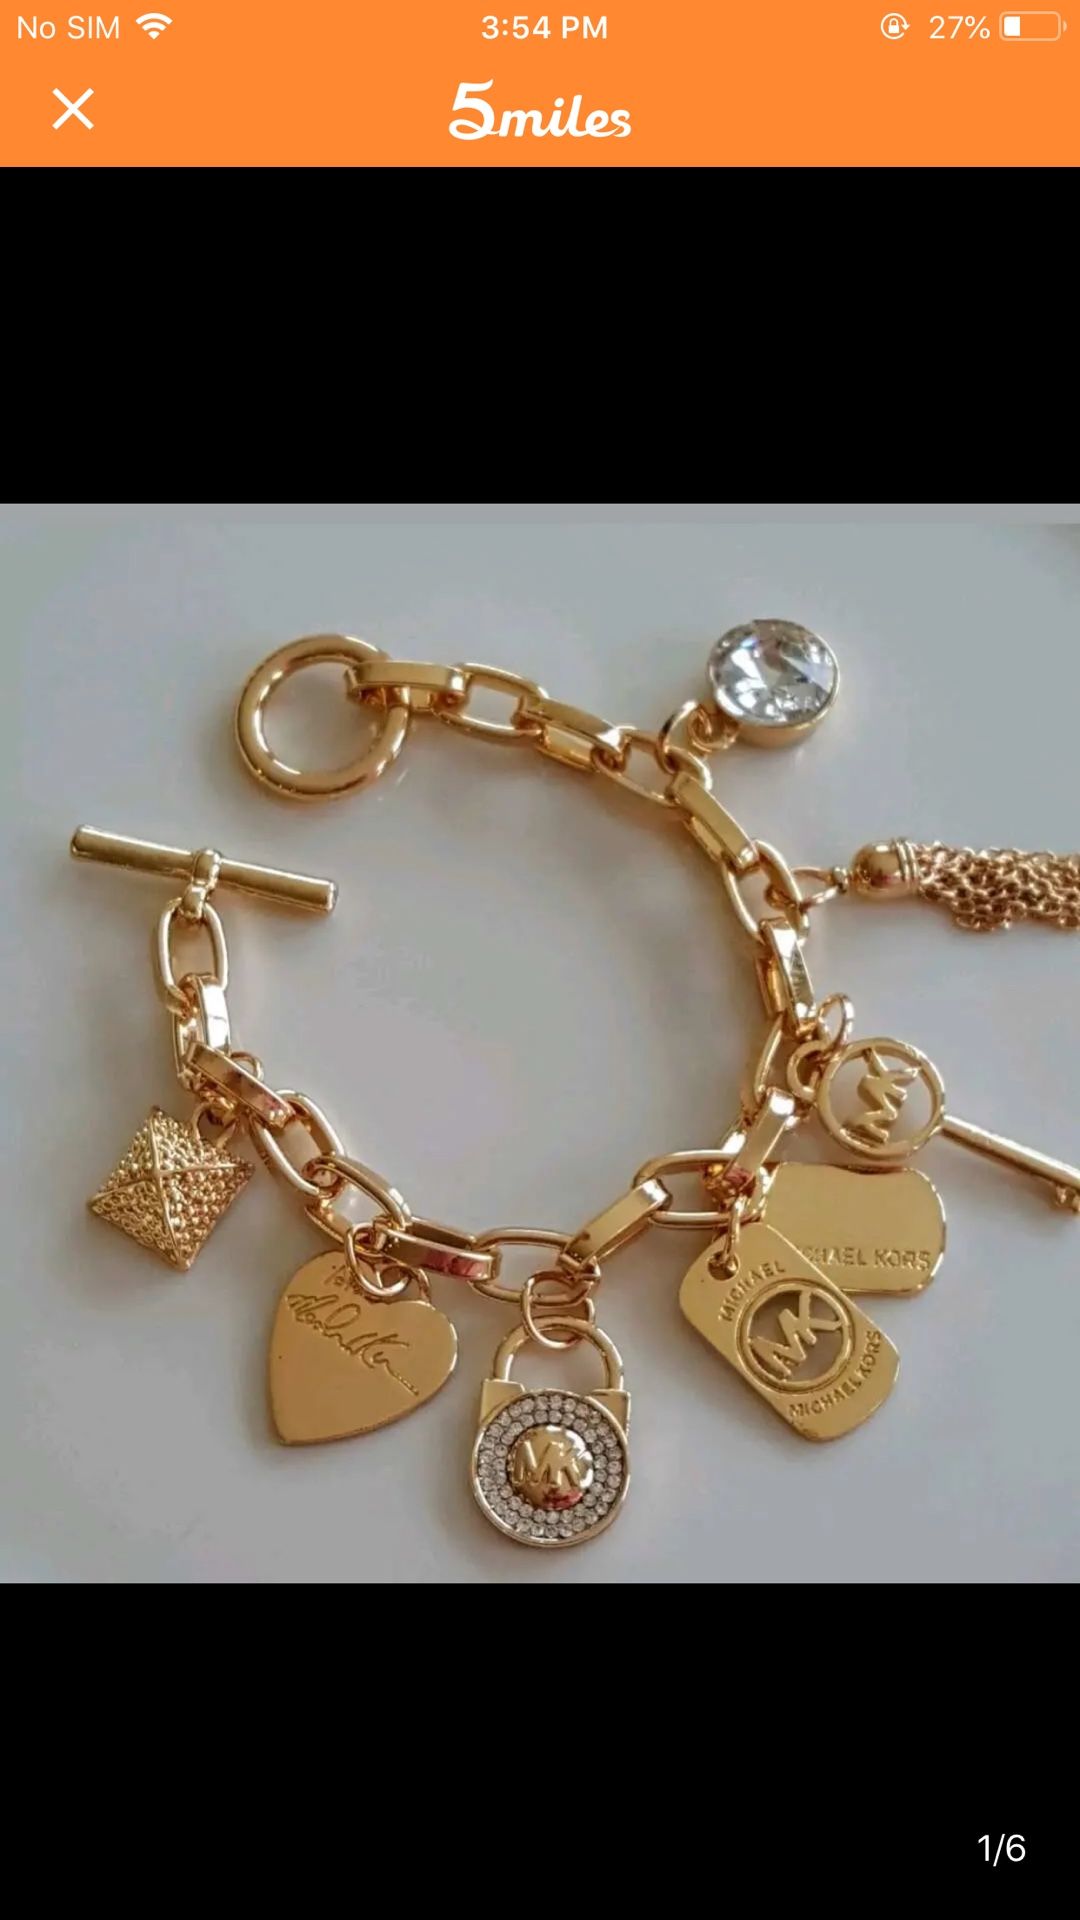 Mk Michael kors charm bracelet gold tone heart key padlock women’s jewelry